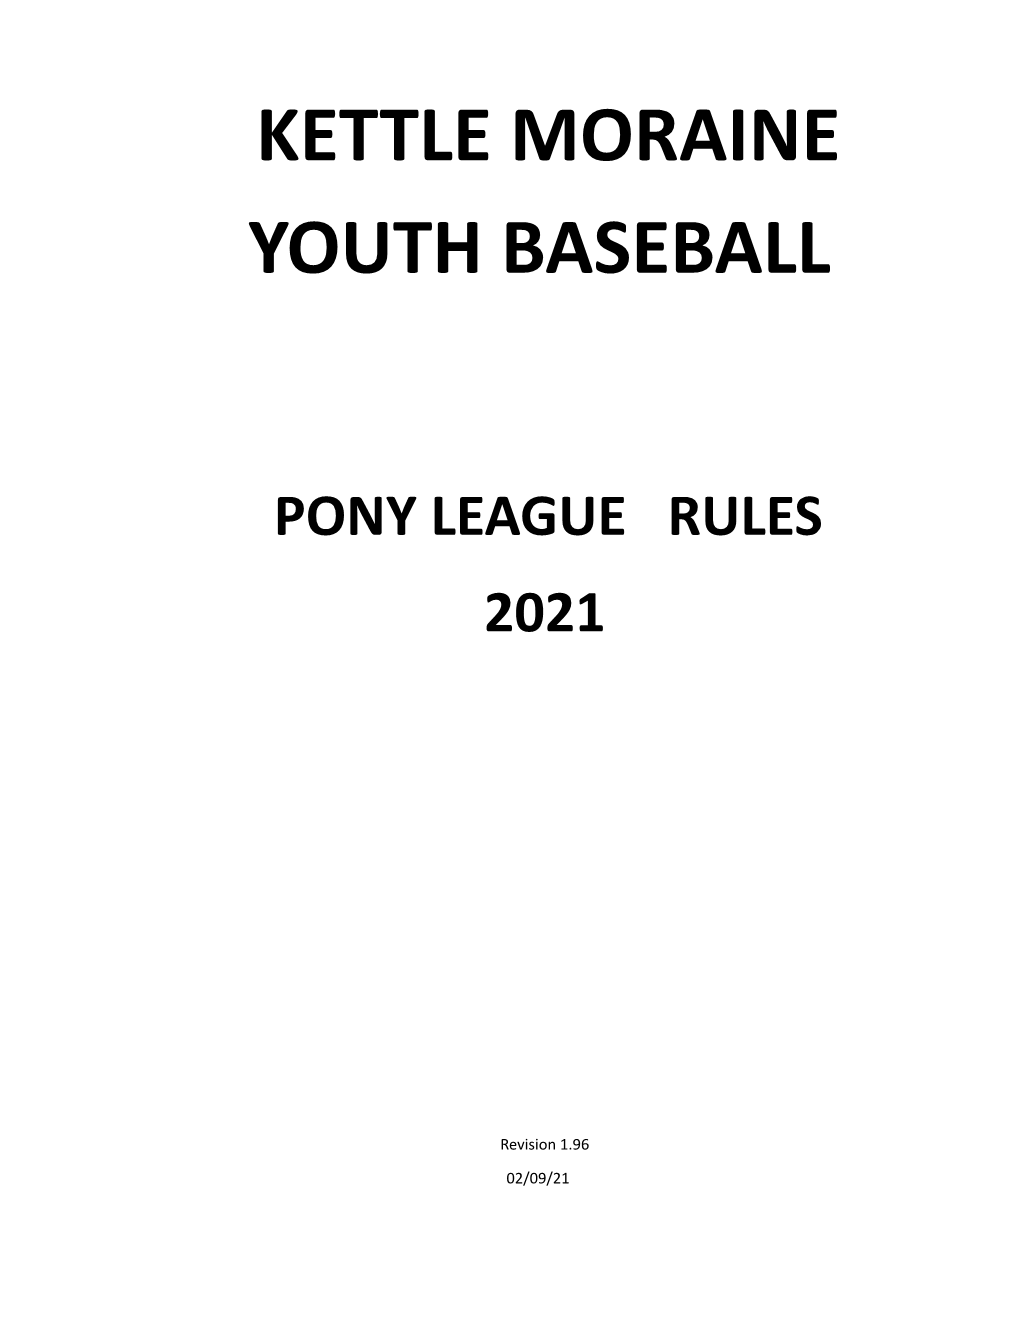 Pony Rules 2021